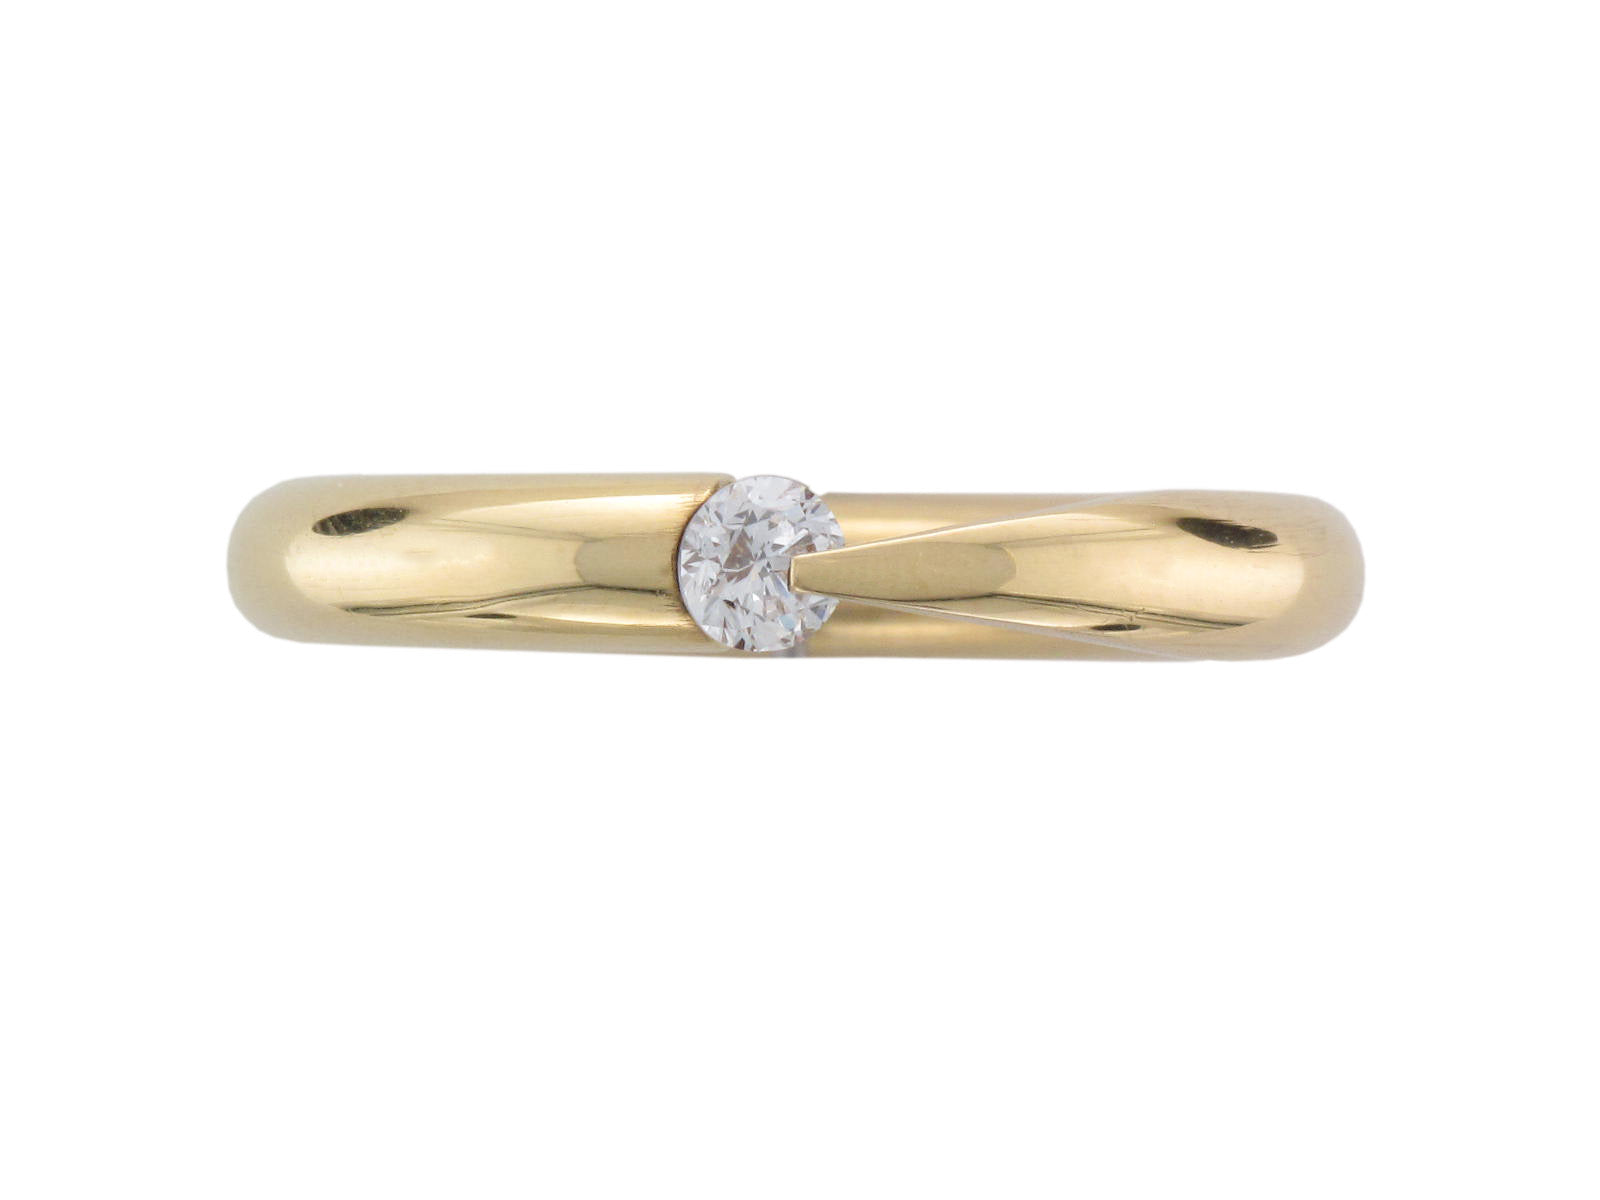 18ct Yellow Gold Chamfer Diamond Tension Ring - Andrew Scott